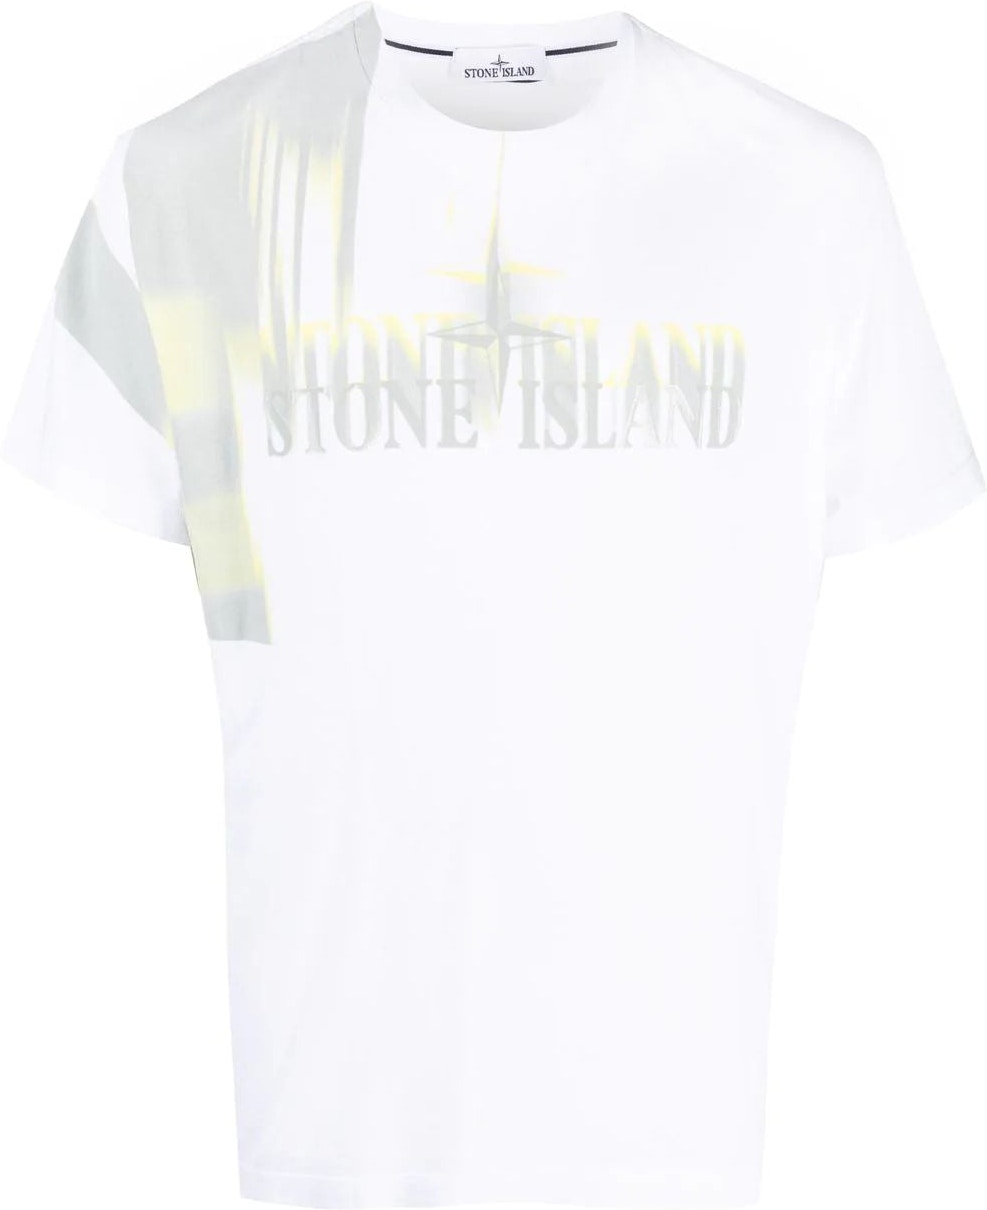 White STONE ISLAND BLURRED LOGO PRINT T-SHIRT